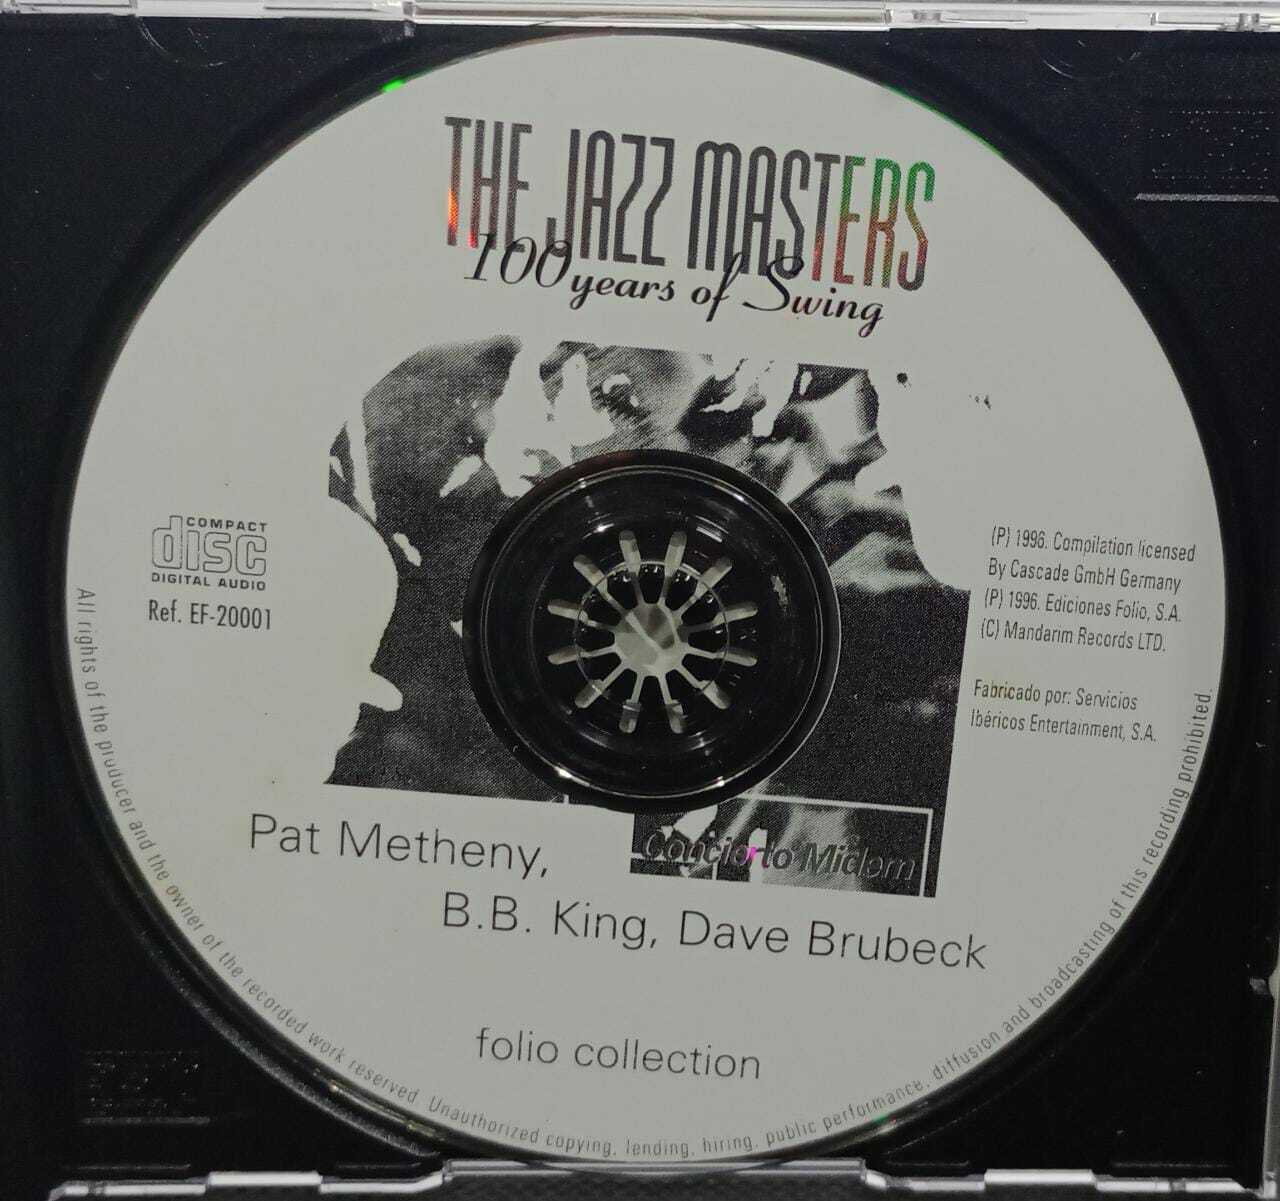 CD - Pat Metheny, B.B. King, Dave Brubeck - The Jazz Master (eu)